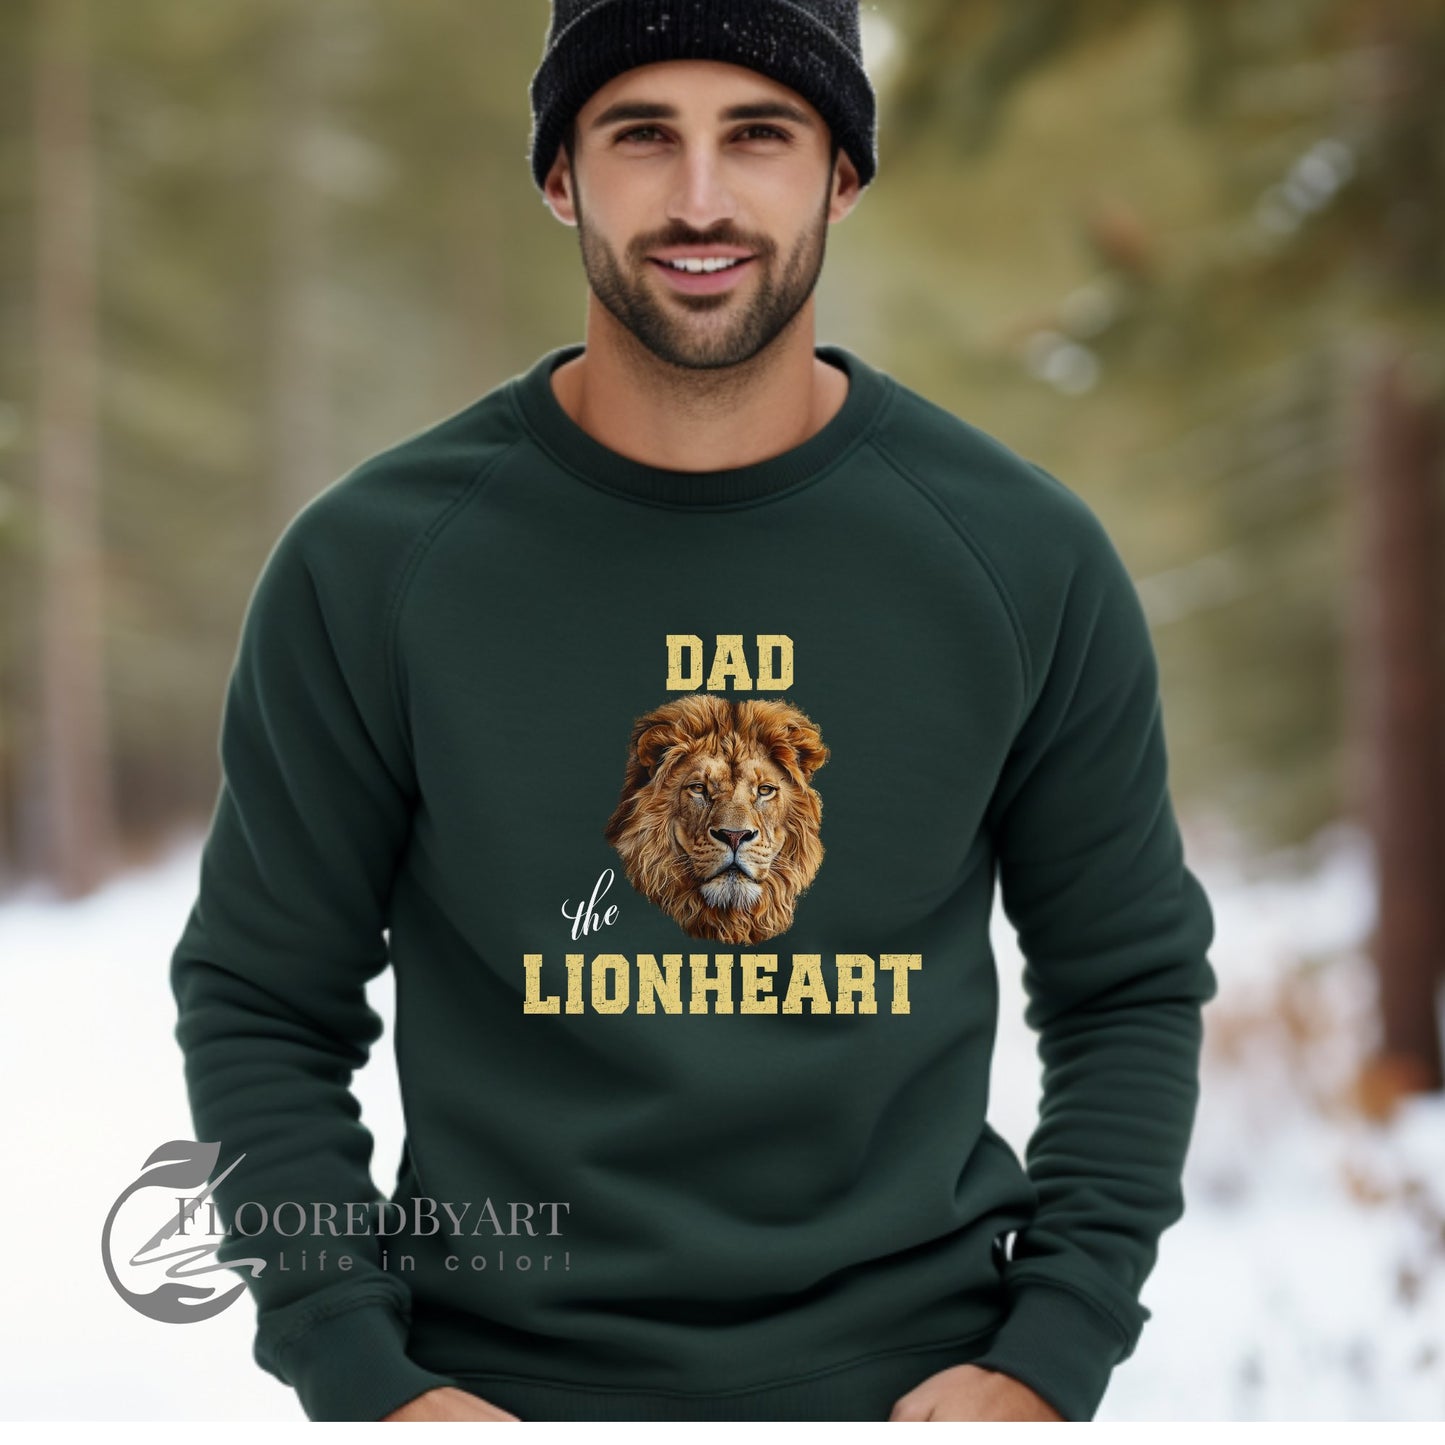 Great Dad Sweatshirt, Unique Cool Lion Head Braveheart Shirt, Funny - FlooredByArt